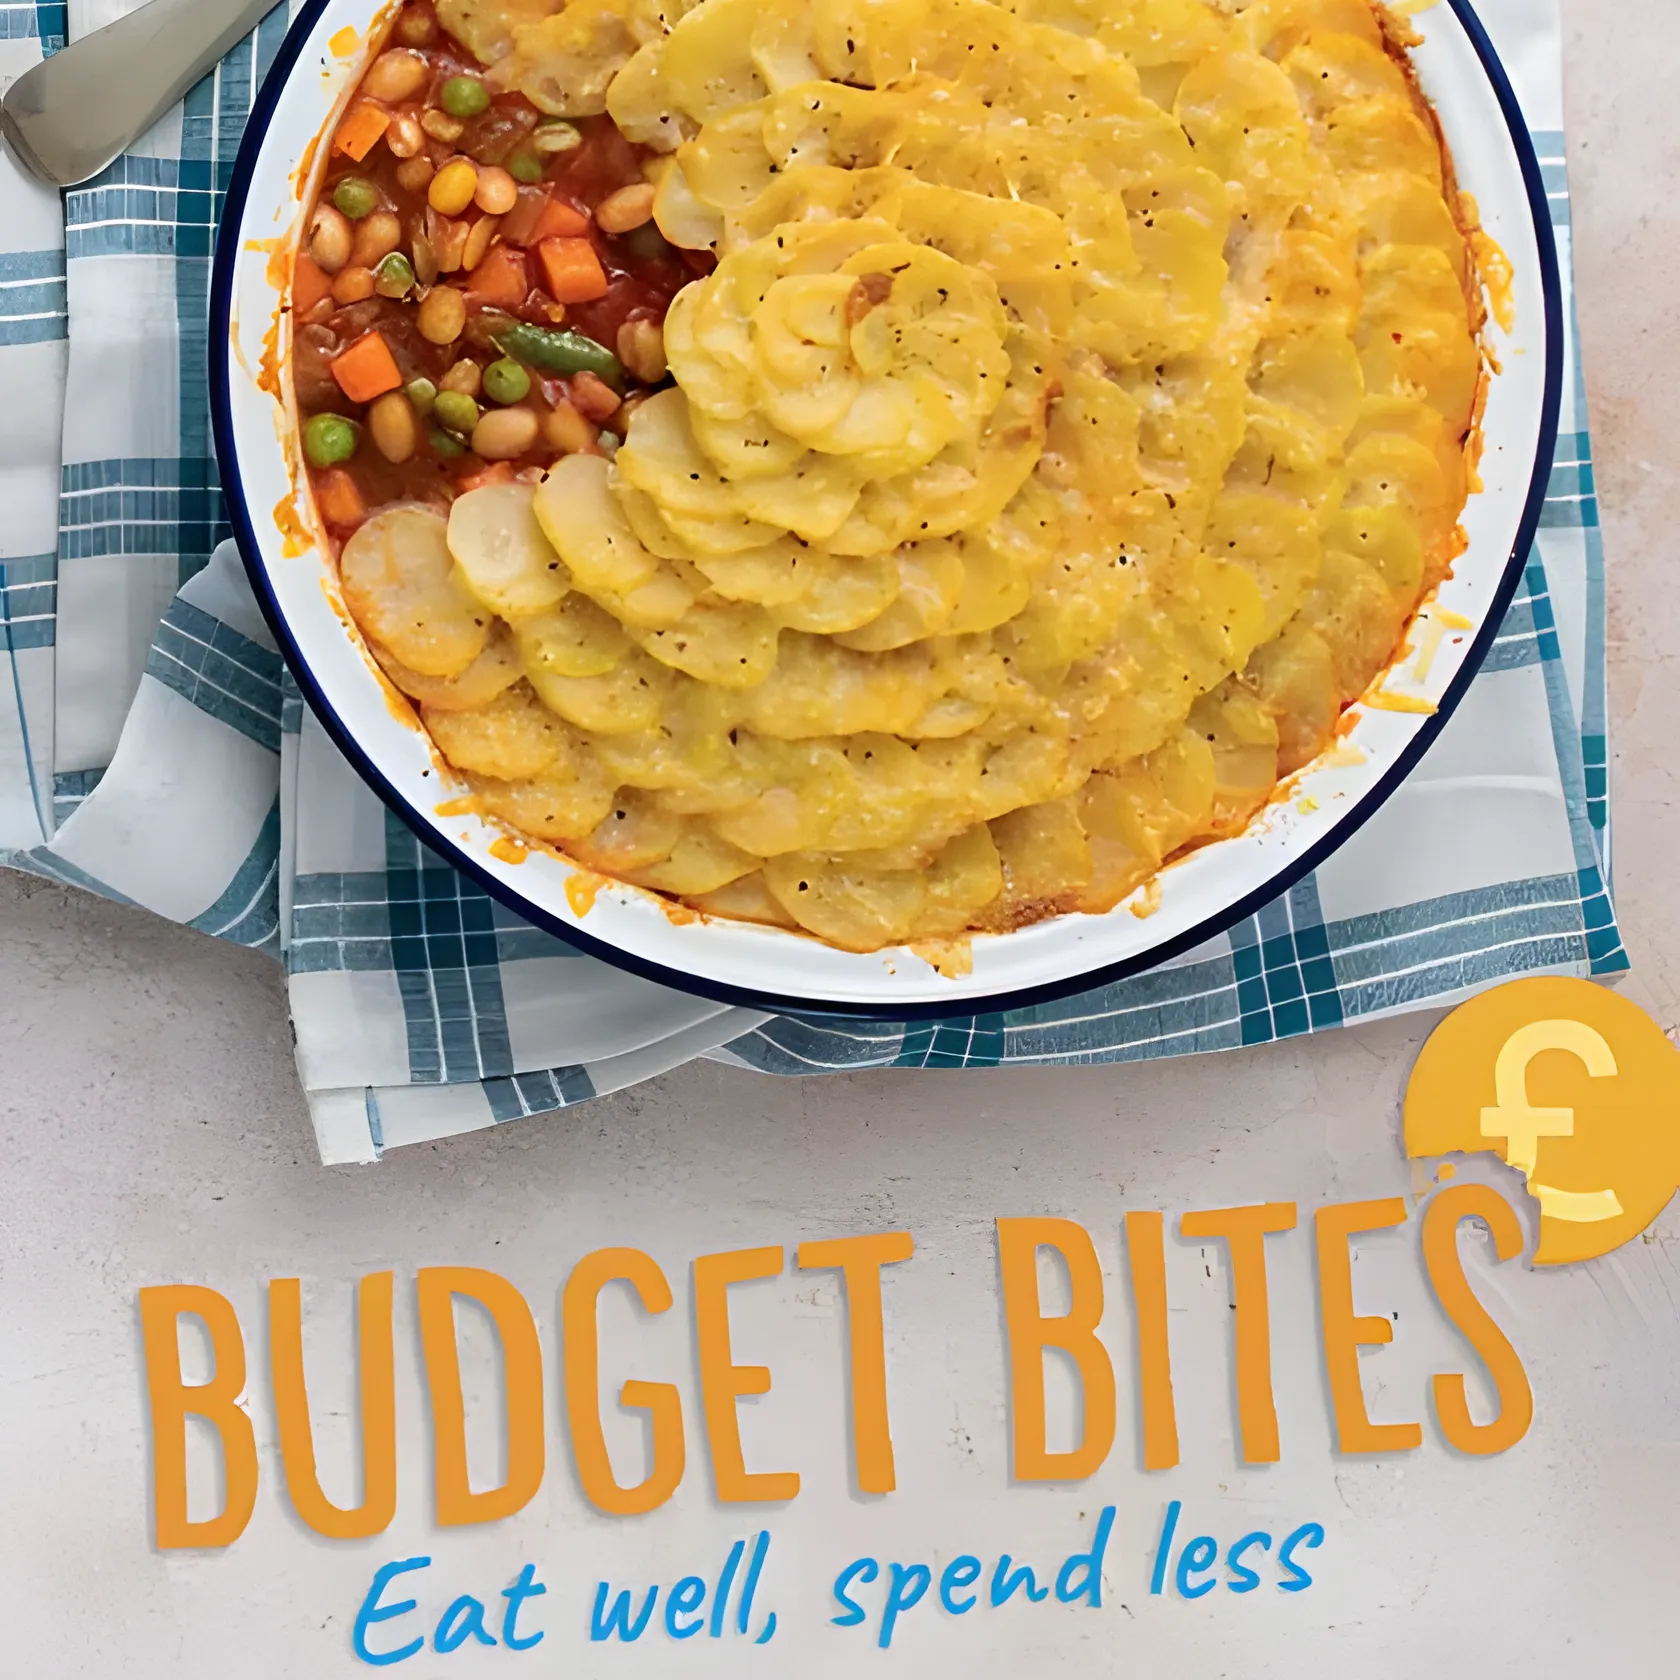 Free Copy Of Budget Bites Cookbook